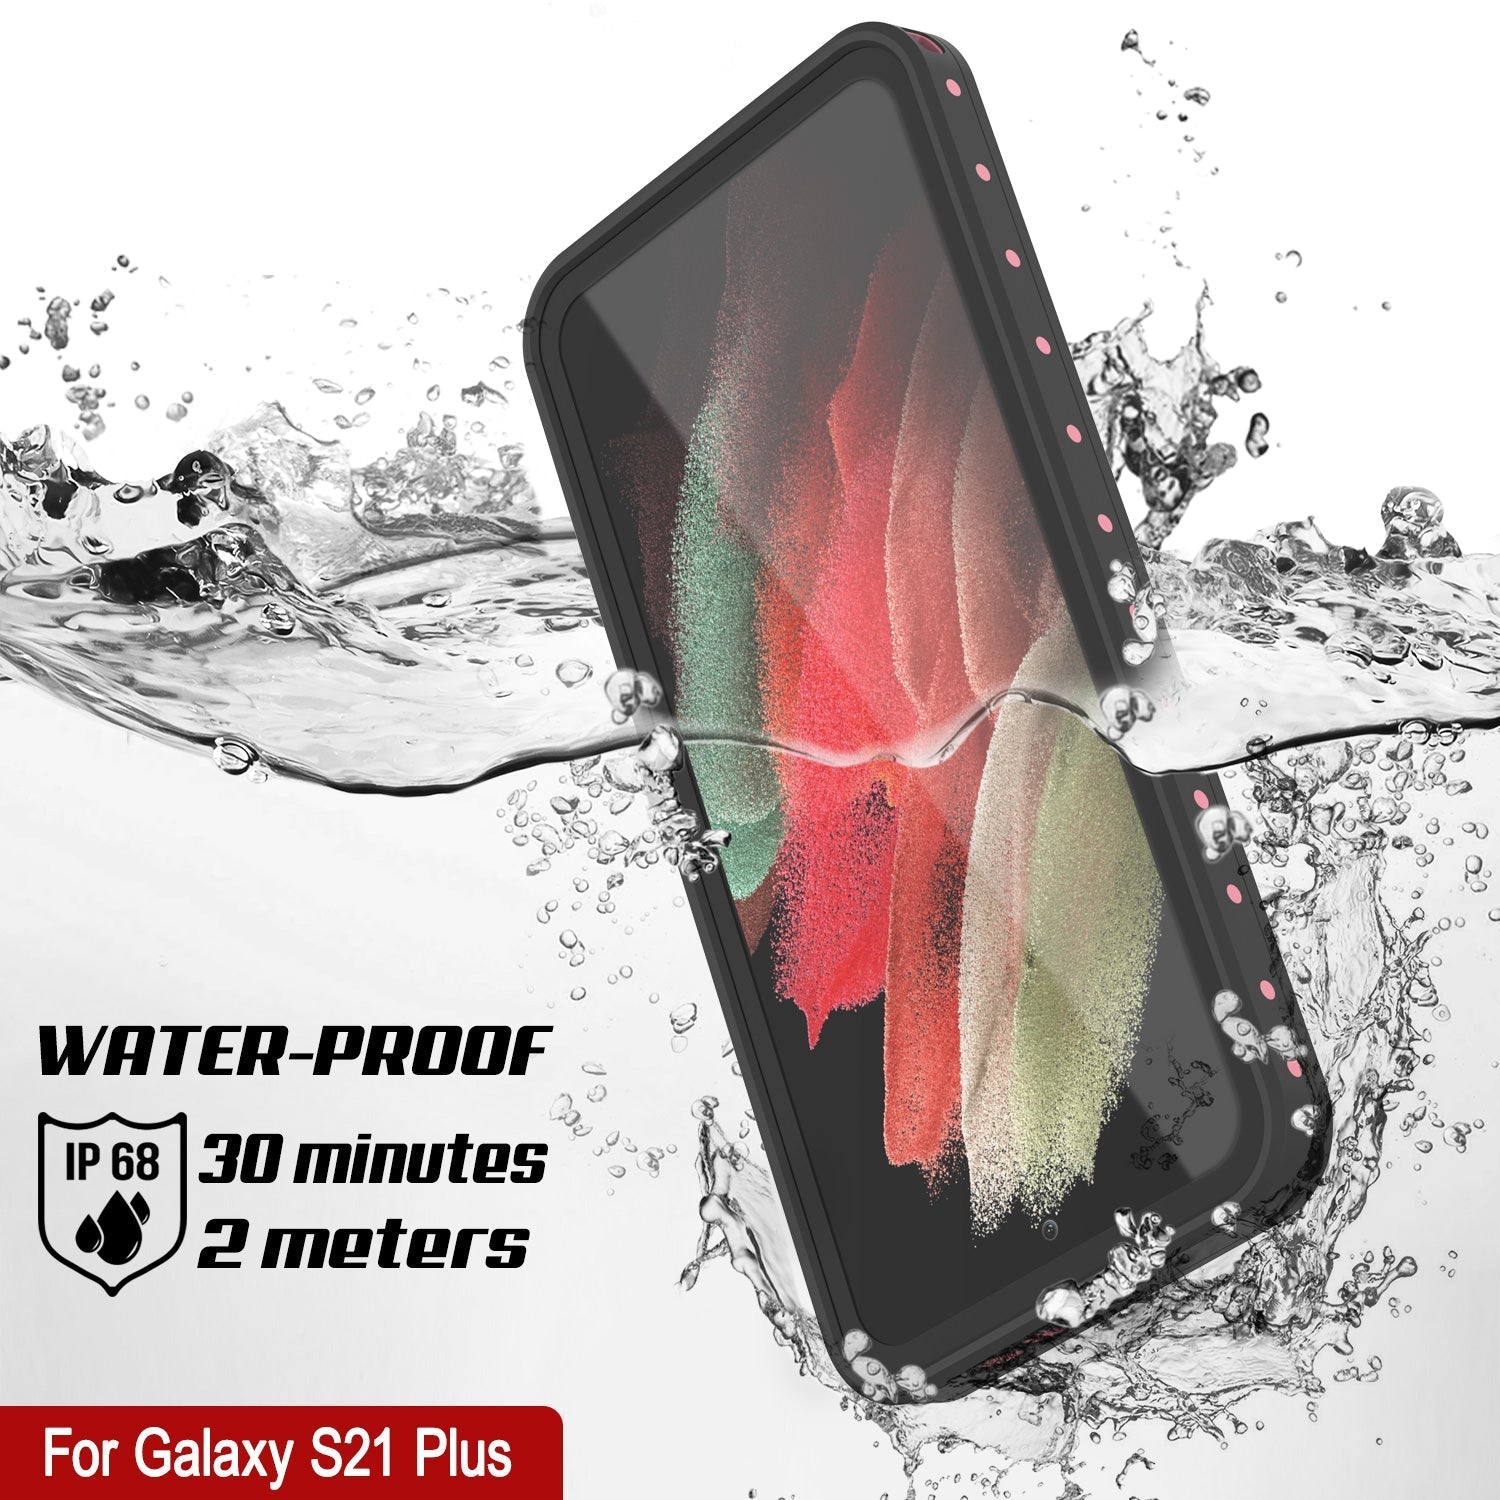 Galaxy S22+ Plus Waterproof Case PunkCase StudStar Pink Thin 6.6ft Underwater IP68 Shock/Snow Proof